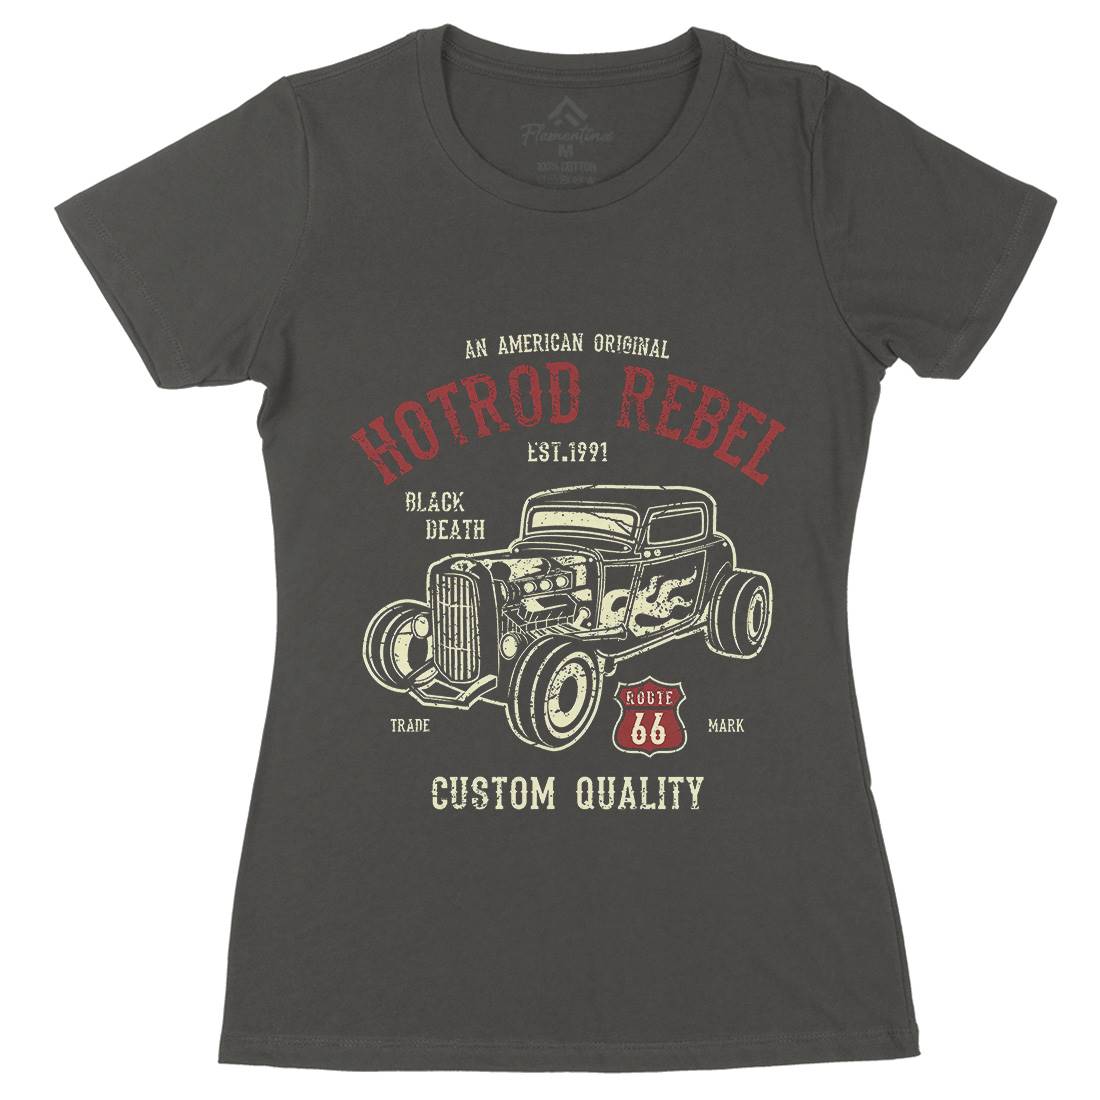 Hot Rod Rebel Womens Organic Crew Neck T-Shirt Cars A067